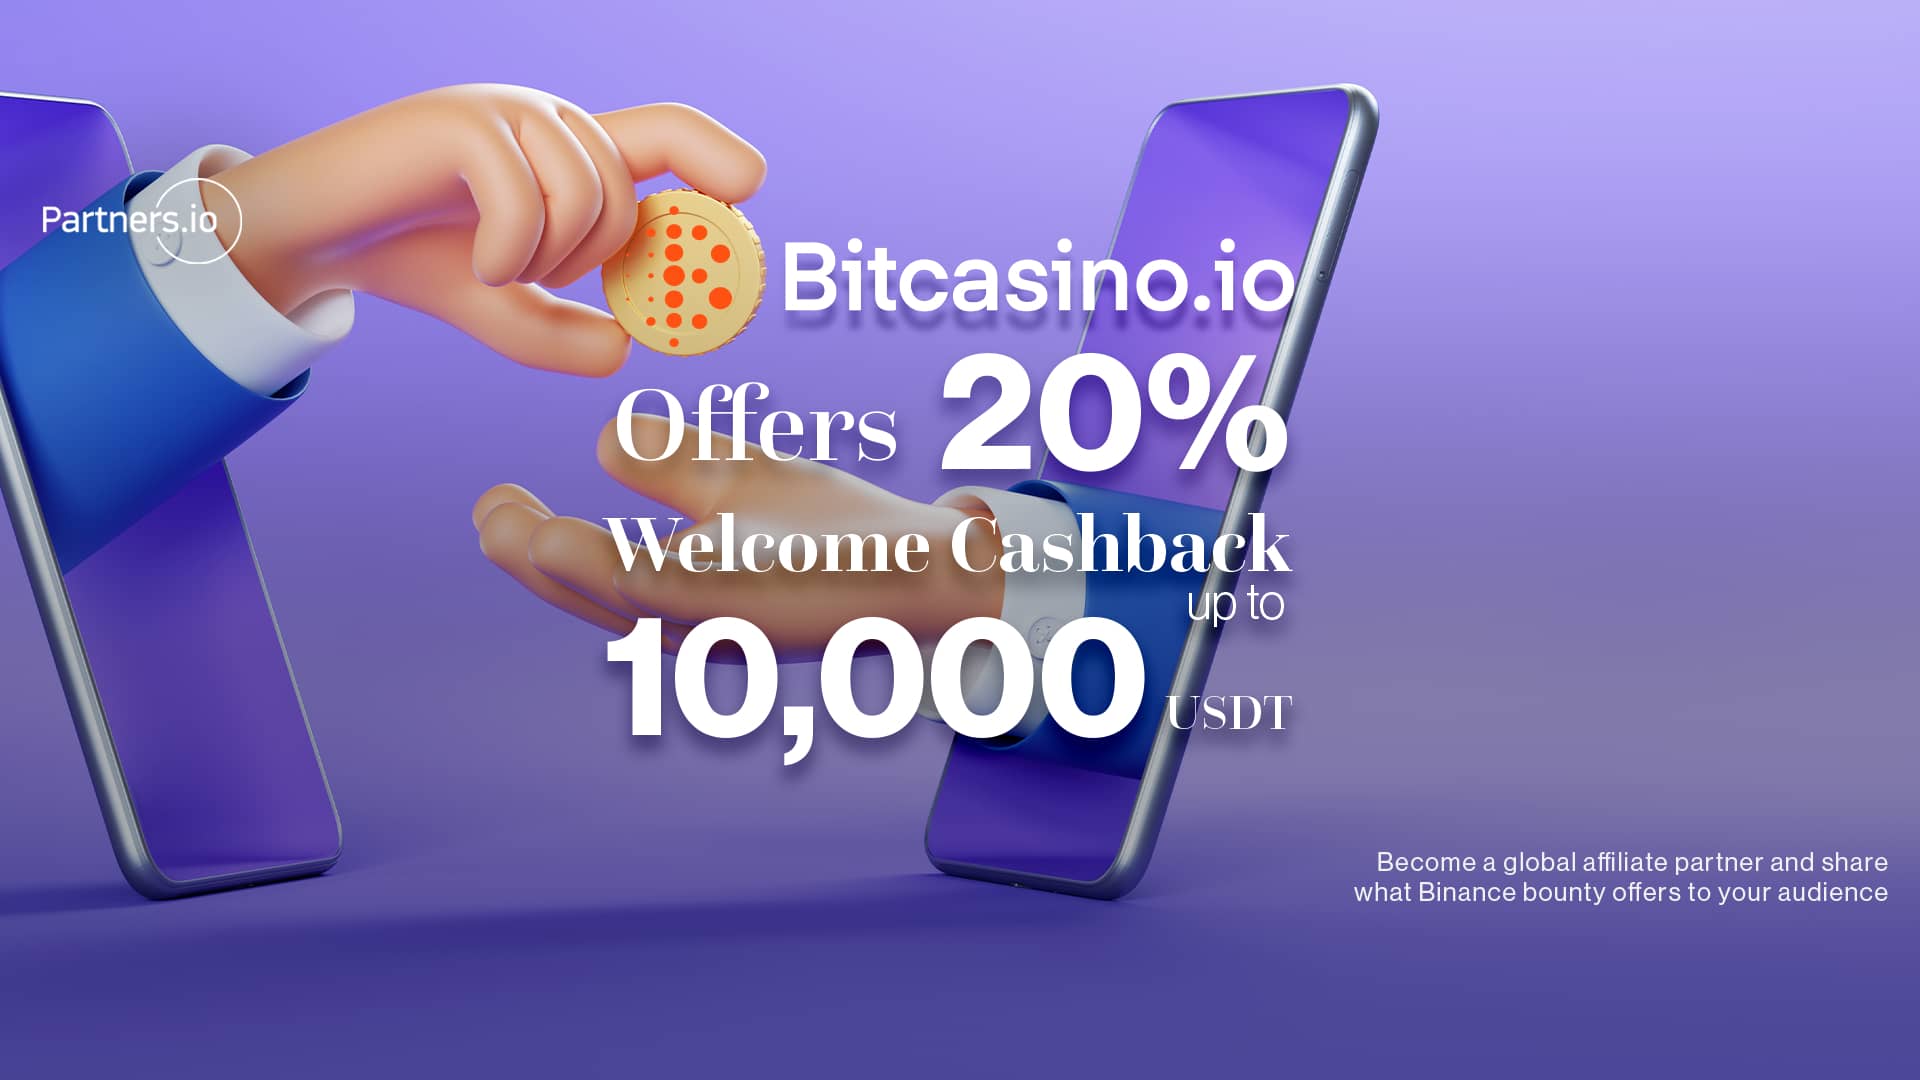 Bitcasino offers 20% Welcome Cashback up to 10K USDT